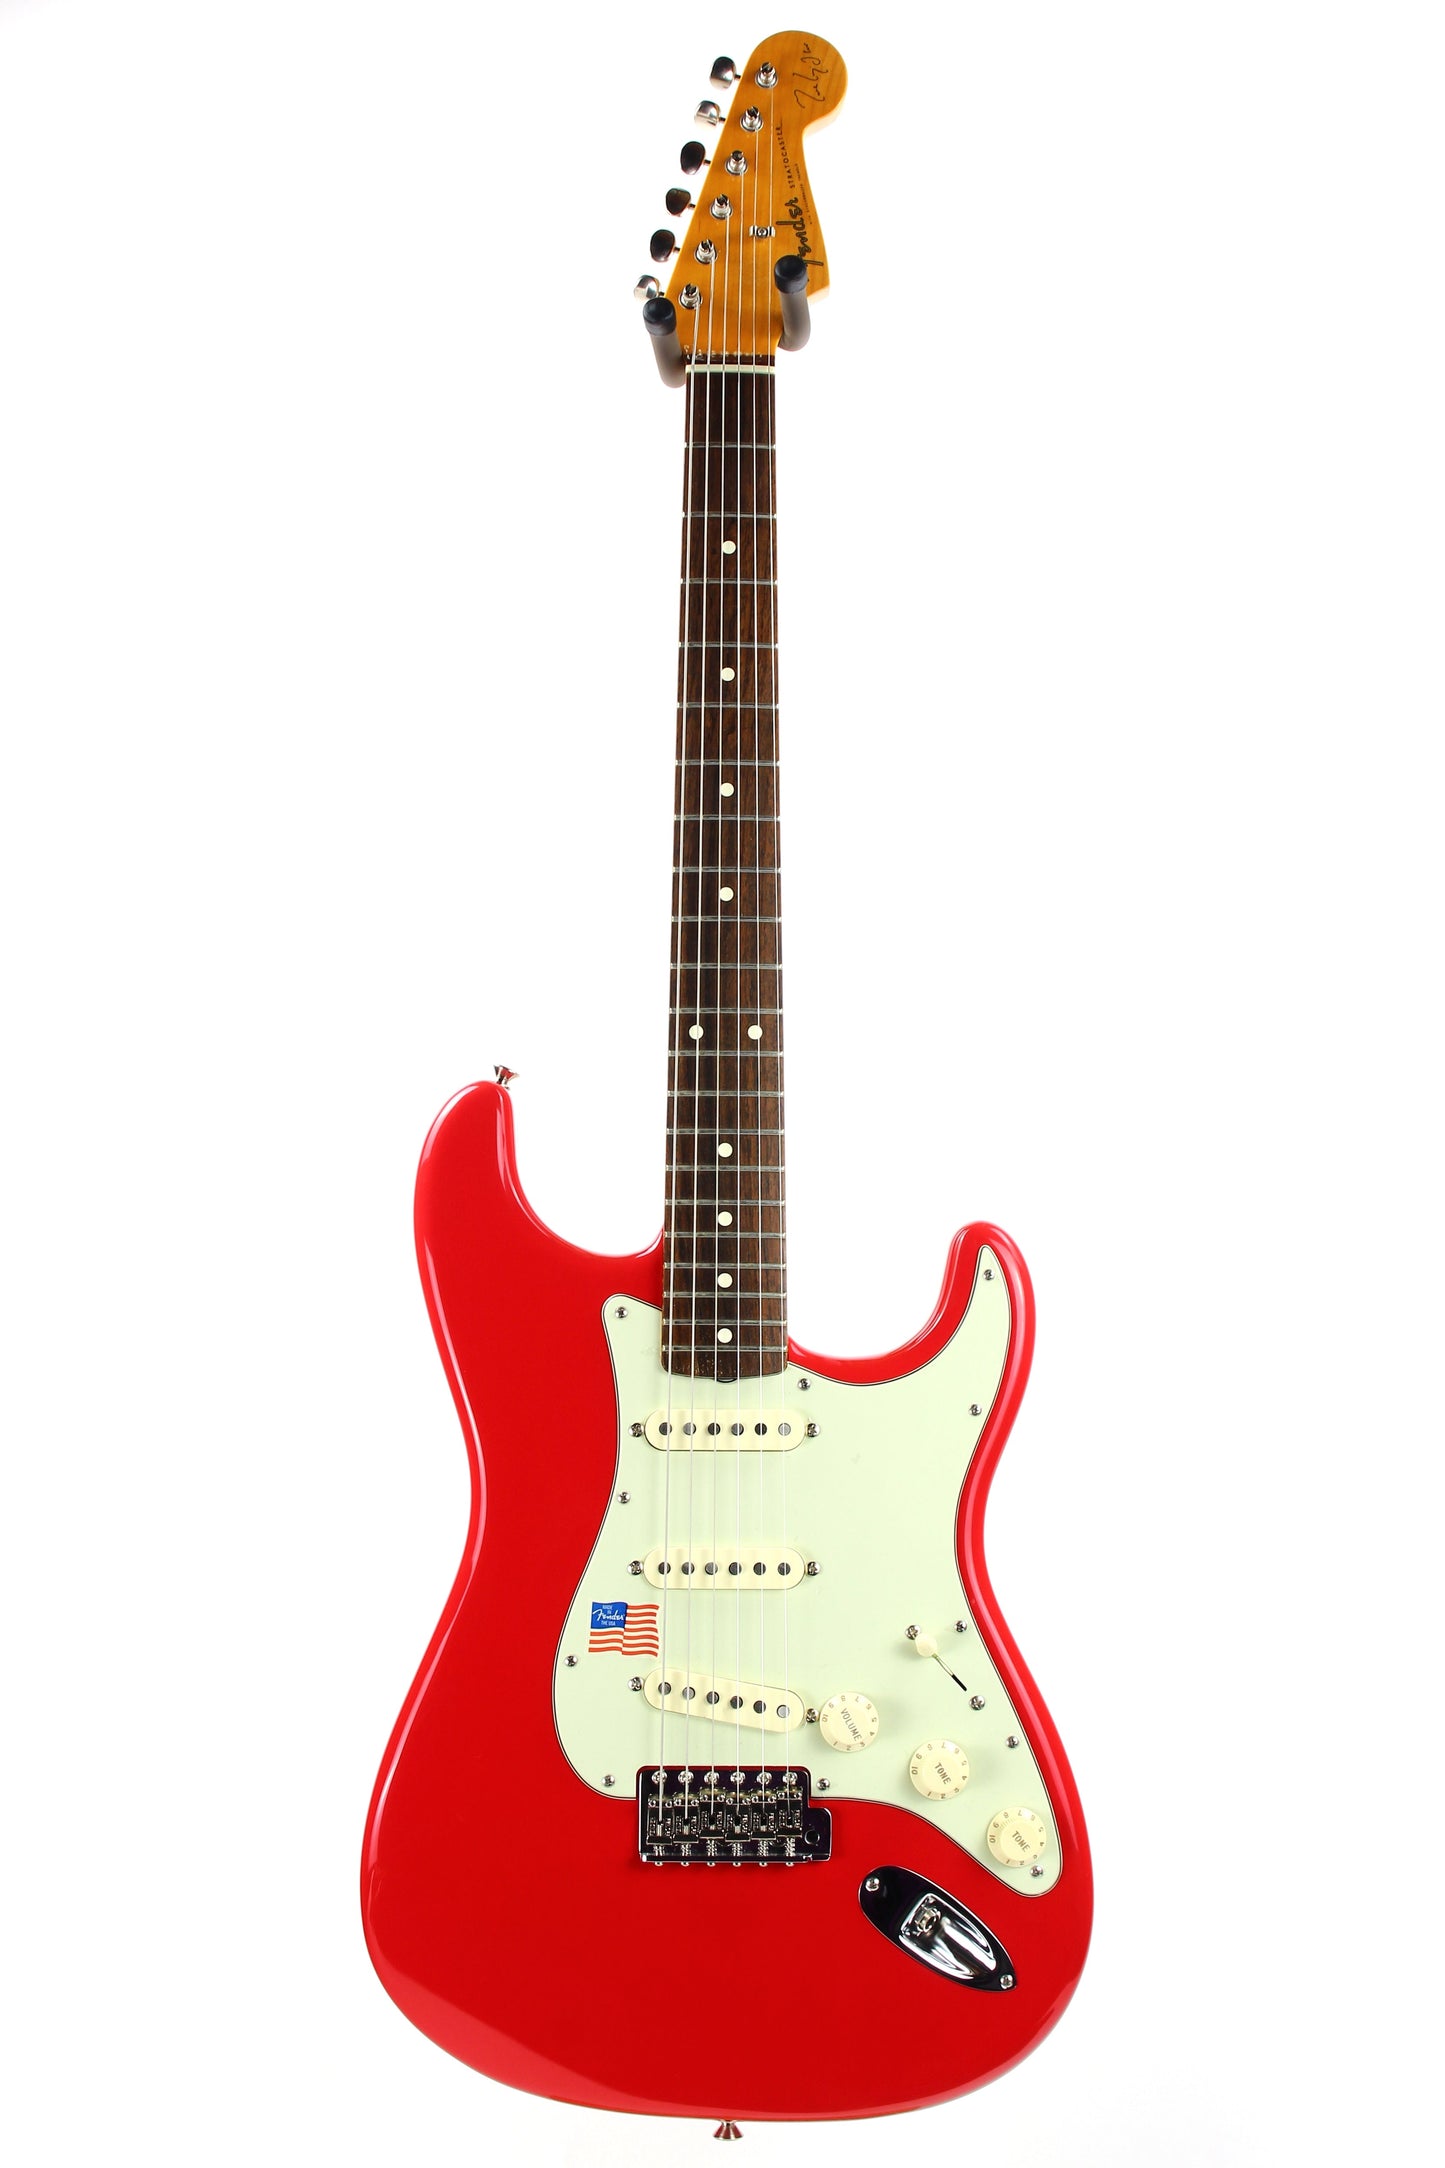 2009 Fender Mark Knopfler Artist Series Signature Stratocaster American Vintage USA - Ash Body, Hot Rod Red, '62 Strat